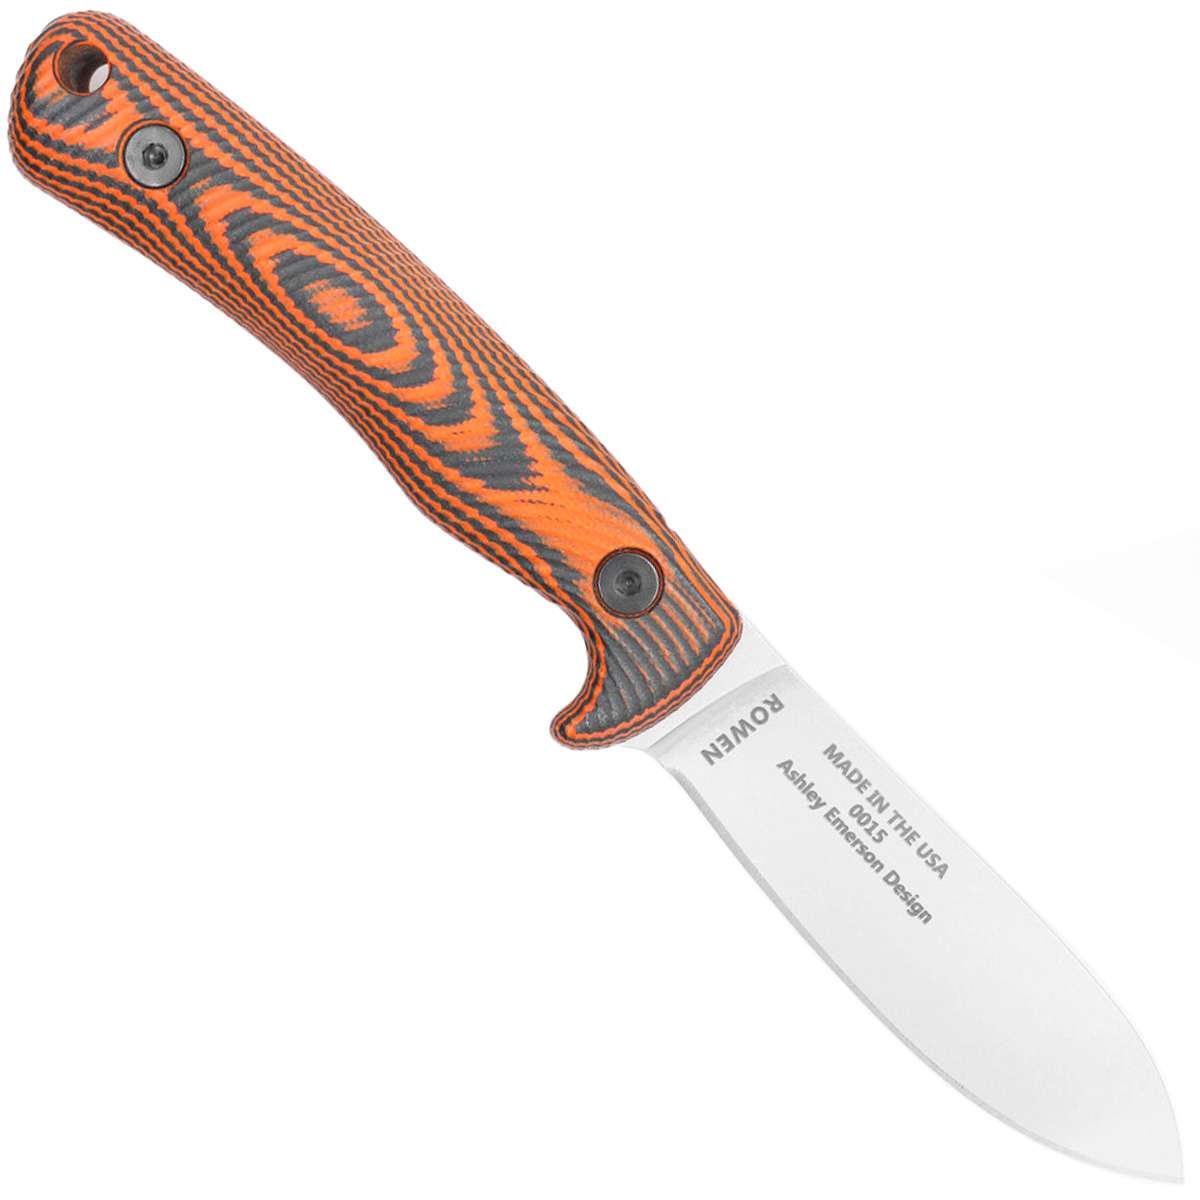 ESEE Ashley Emerson Game Knife - S35VN Steel/Orange 3D G10